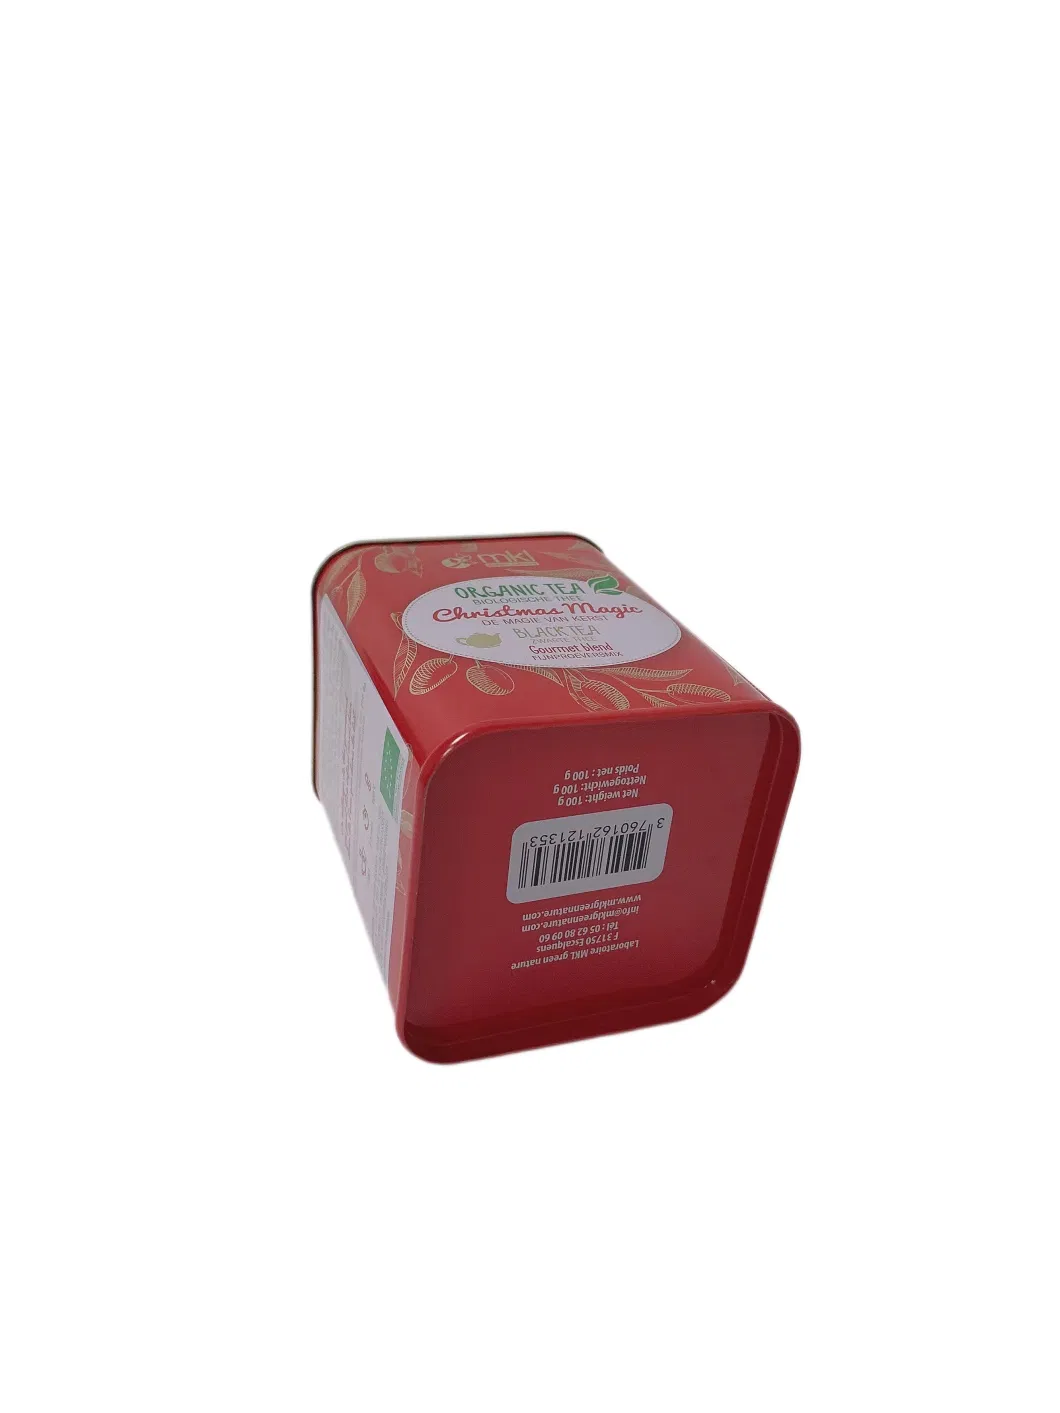 Square Shape Tea Tin Metal Tin Can Gift Box with Press Lid Tin Tea Packaging for 100g Tea Packaging Tin Box